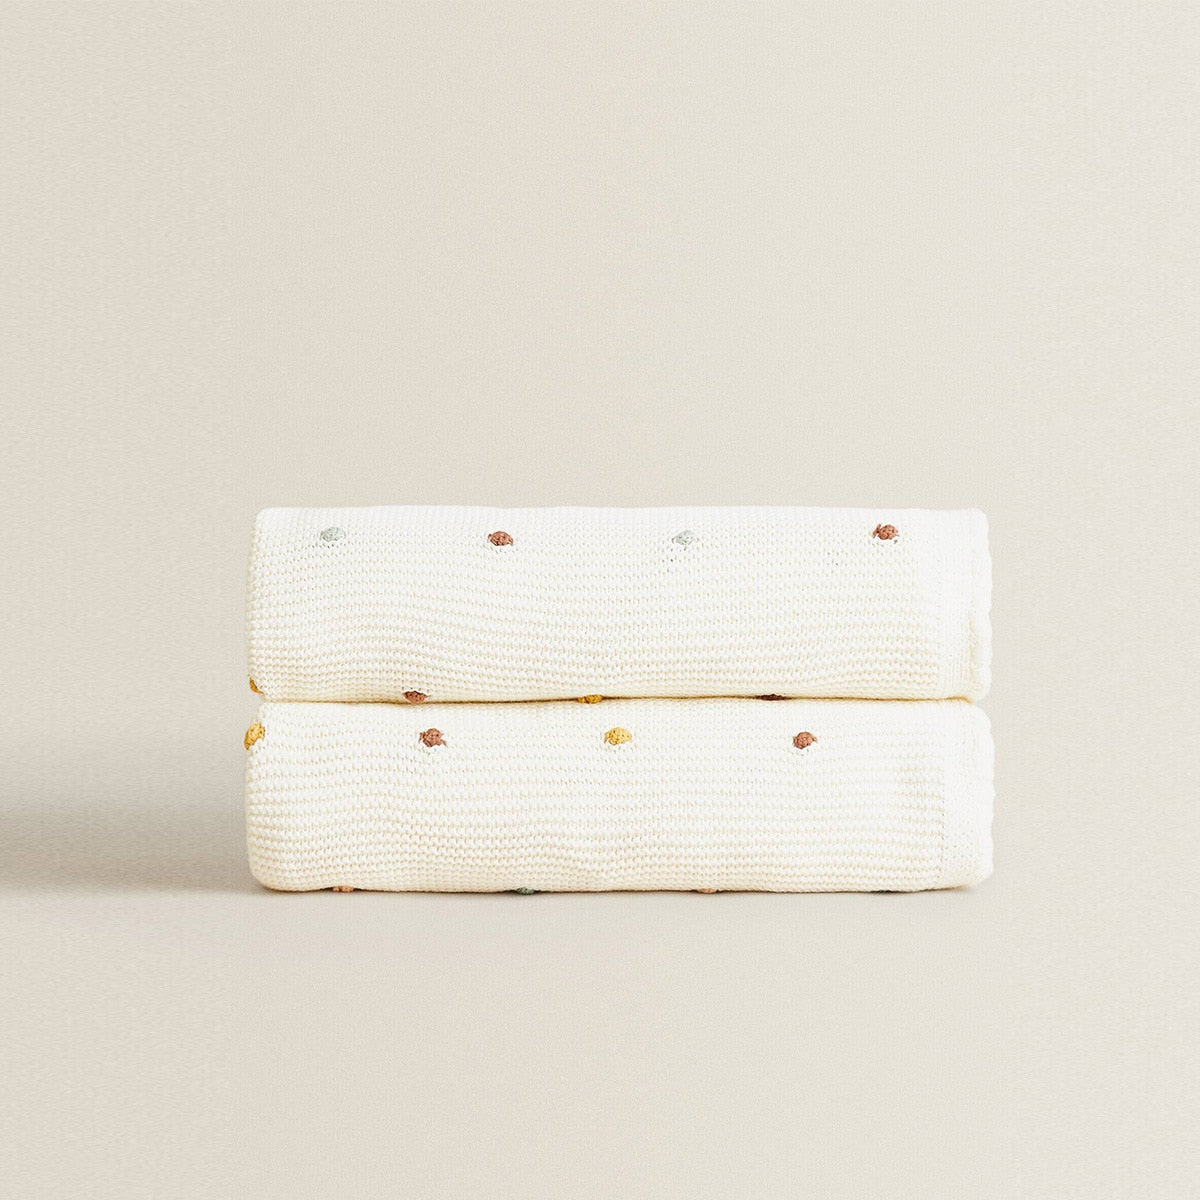 Nordic Style Waffle Knit Blanket